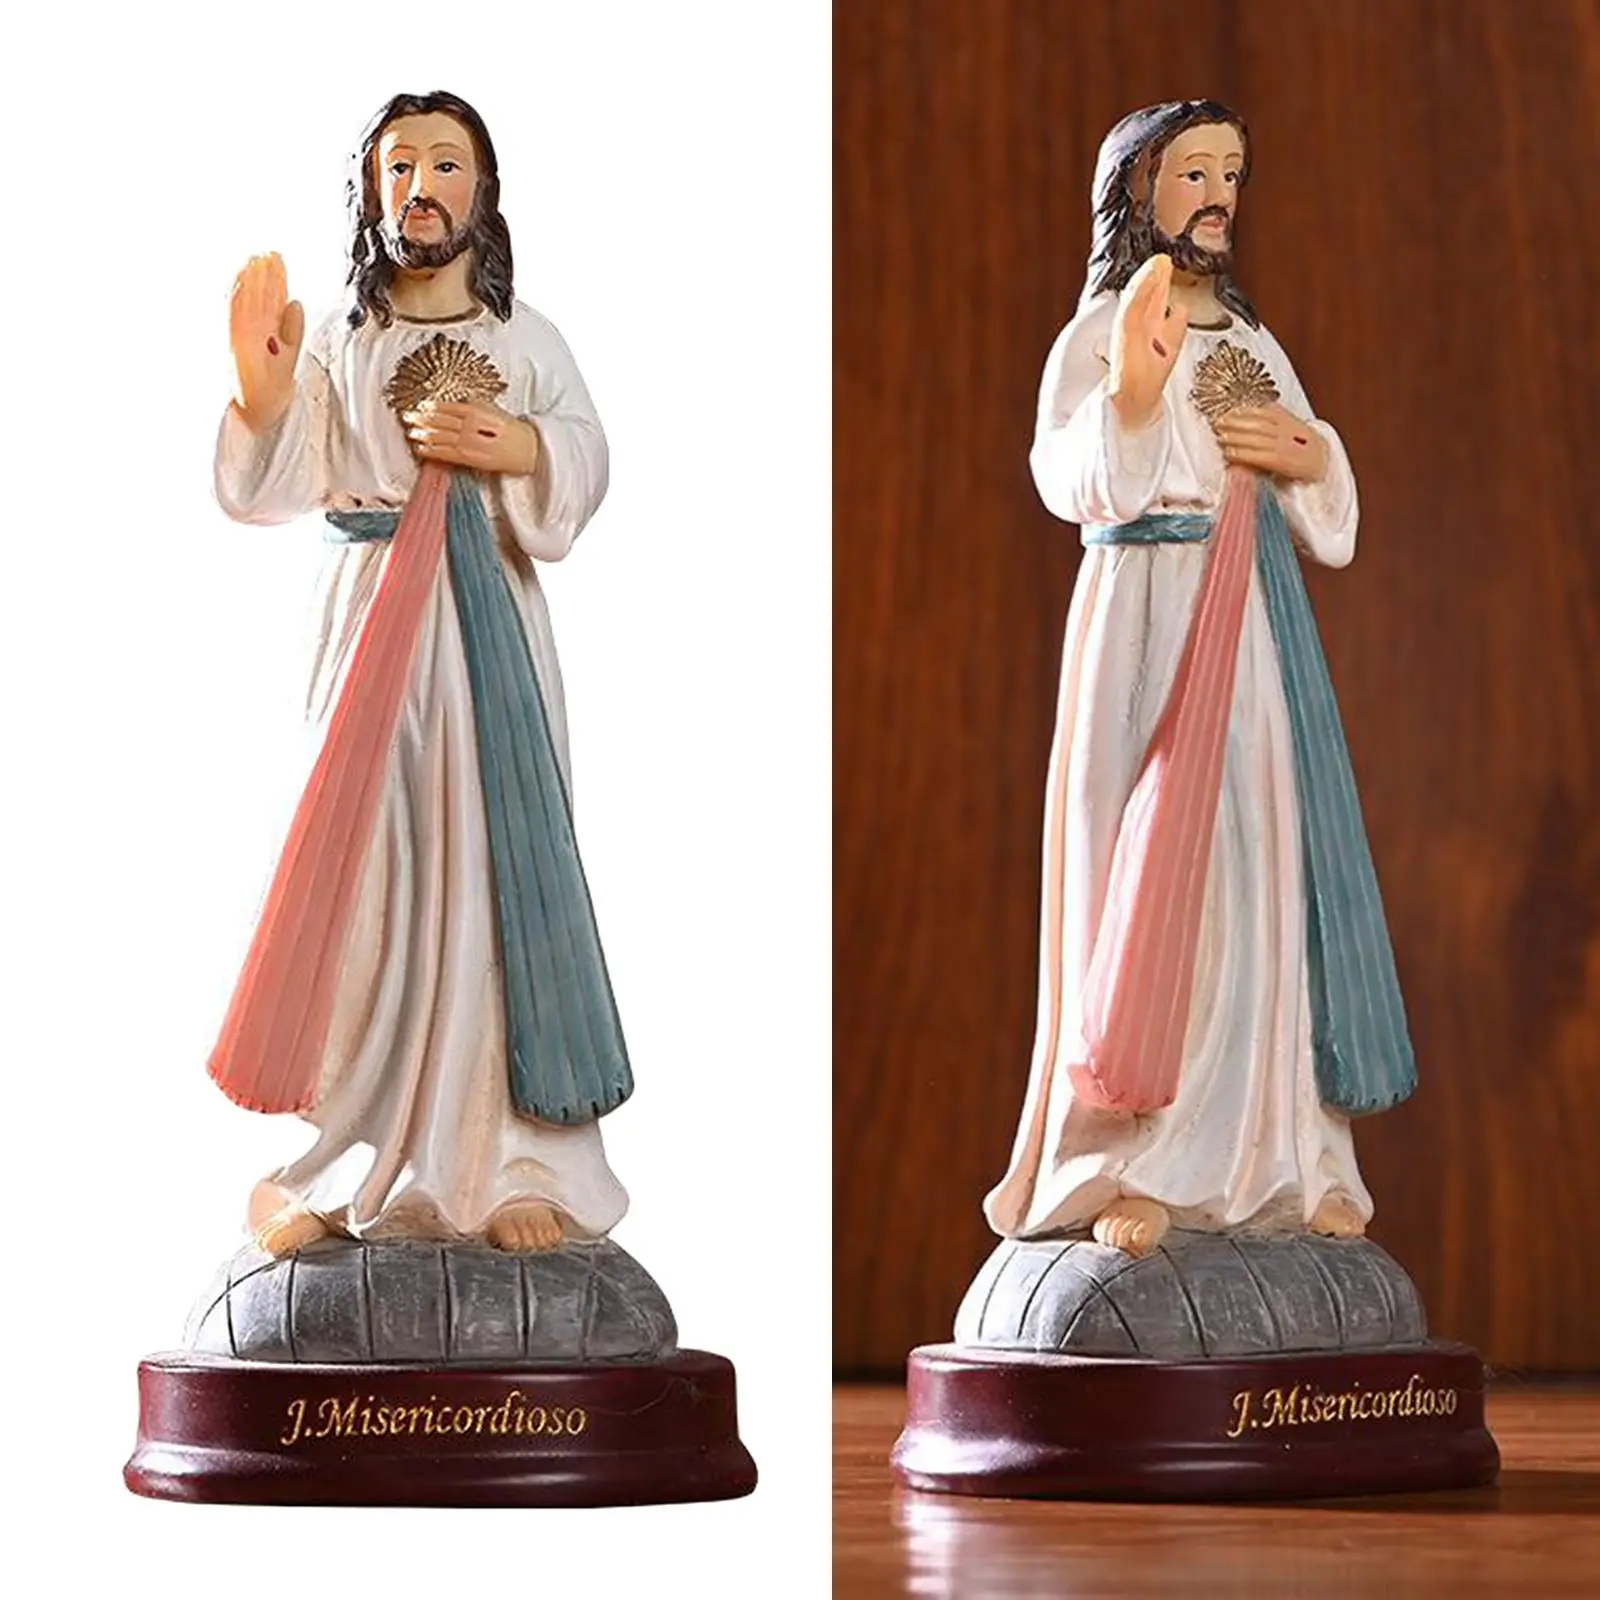 Religious Figurine Resin Jesus Statue Figure Sculpture Savior Figurine Catholic Christian Religious Gift Home Chapel Decoration